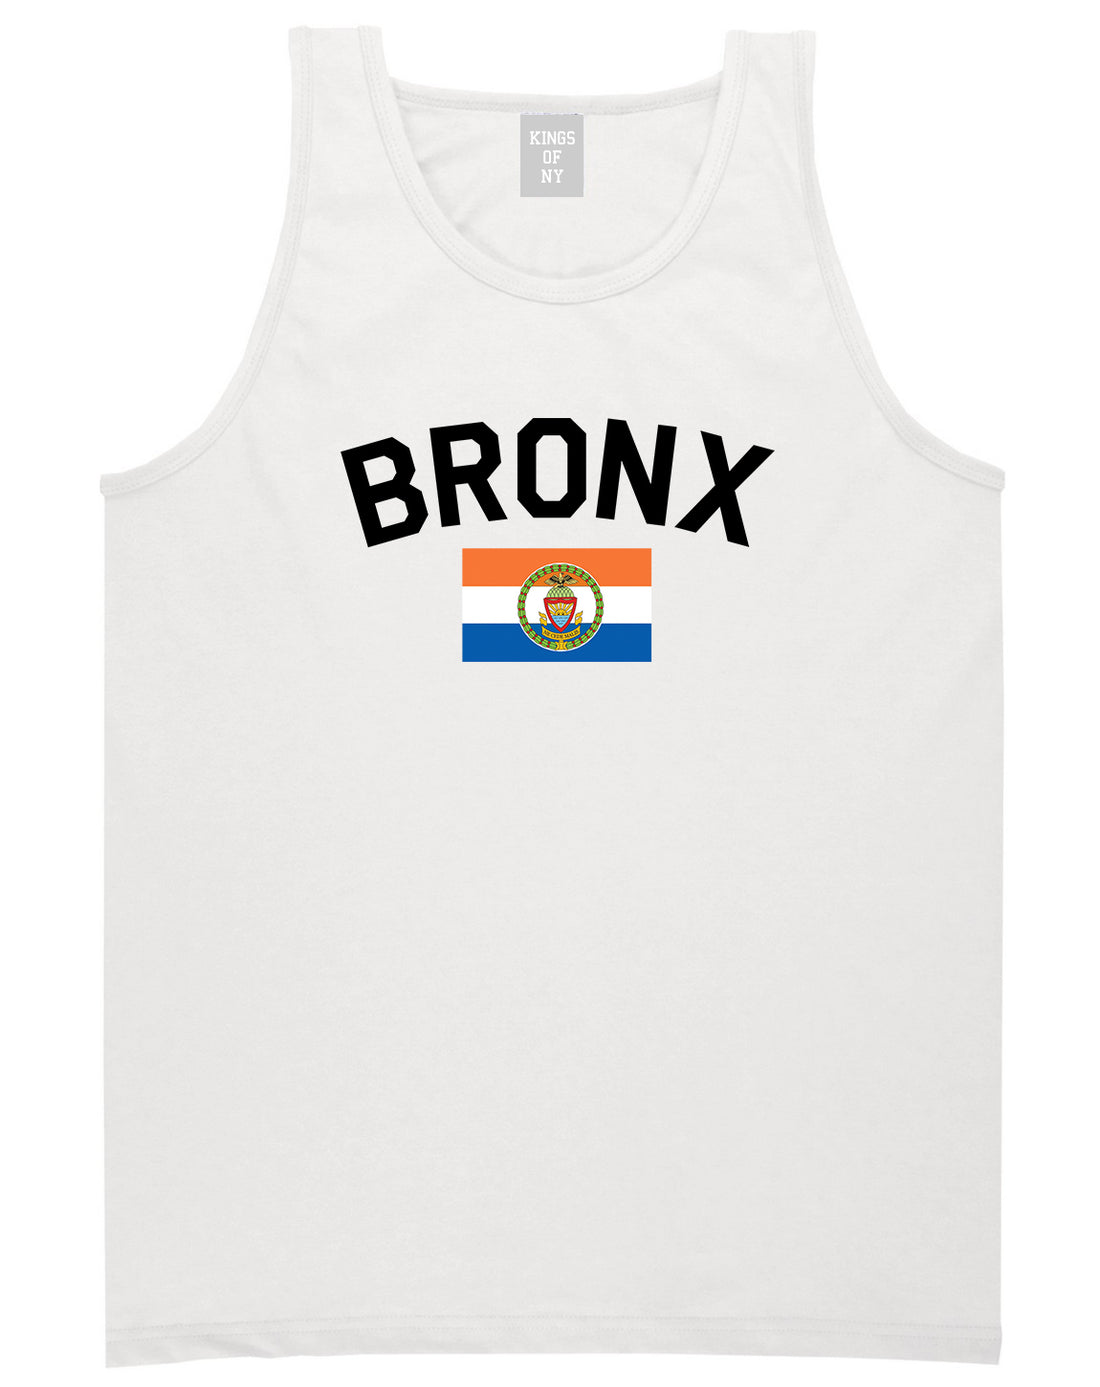 Bronx Flag Mens Tank Top Shirt White